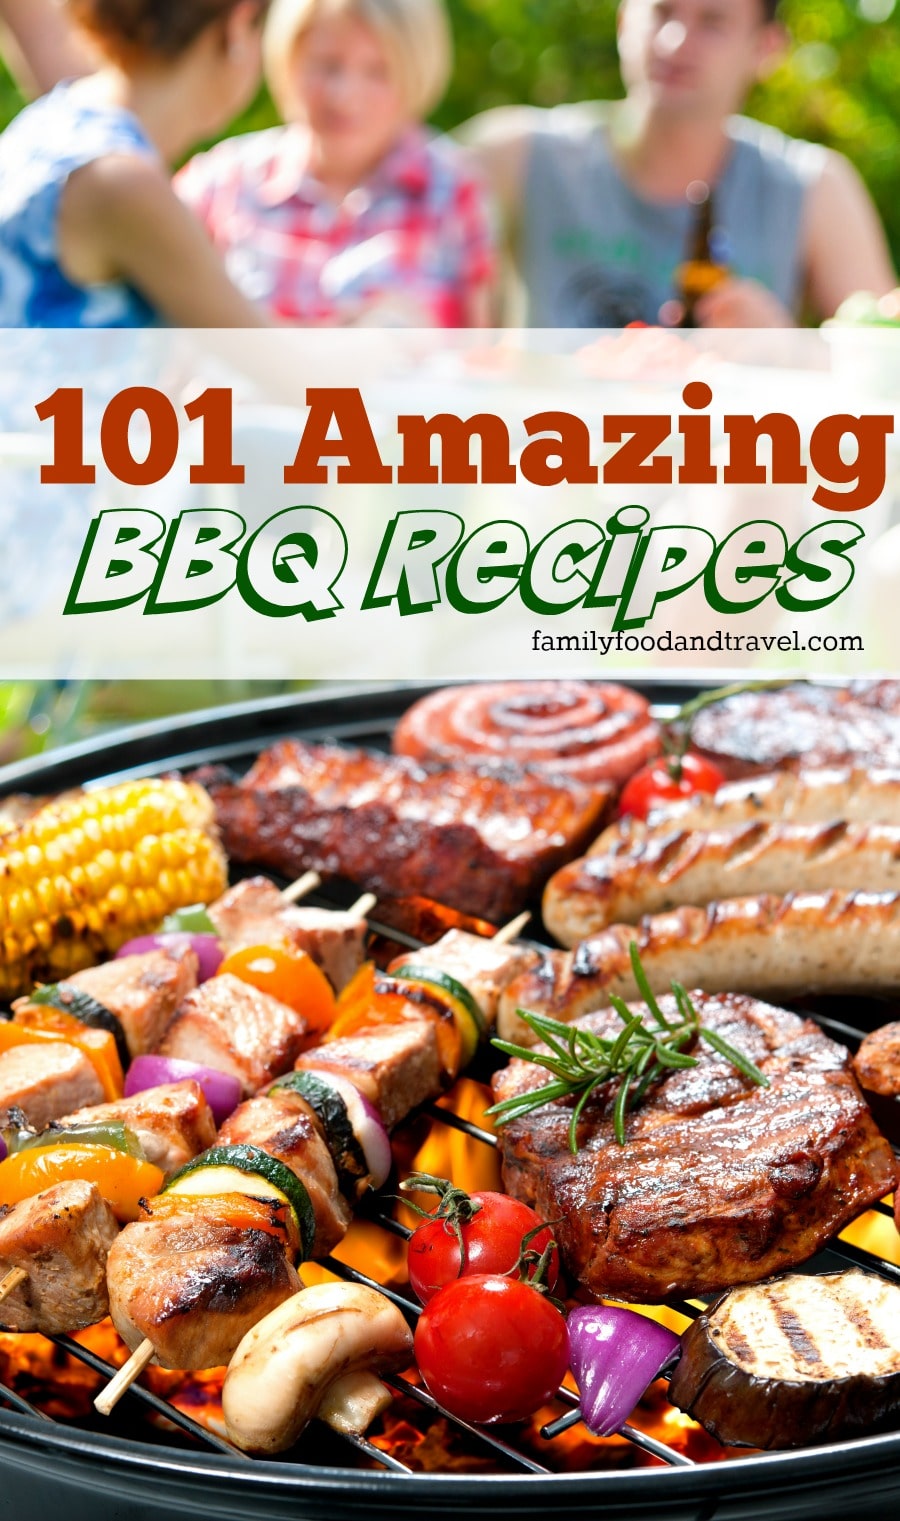 101 Amazing BBQ Recipes